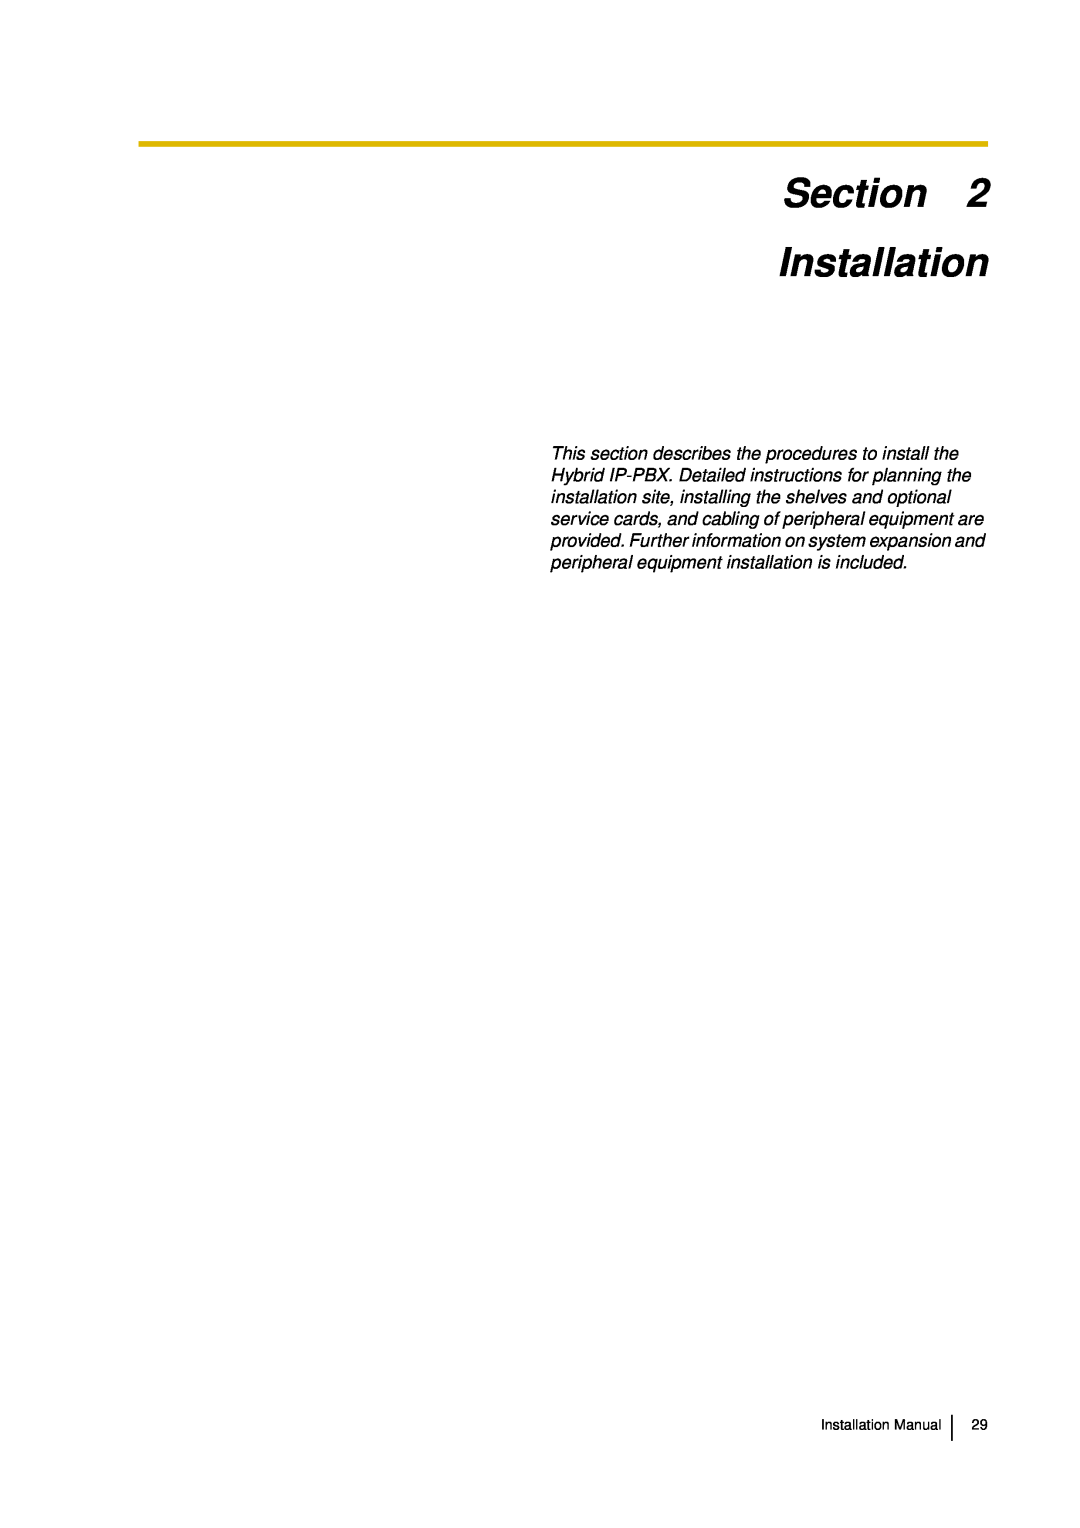 Panasonic KX-TDA30 installation manual Section Installation, Installation Manual 